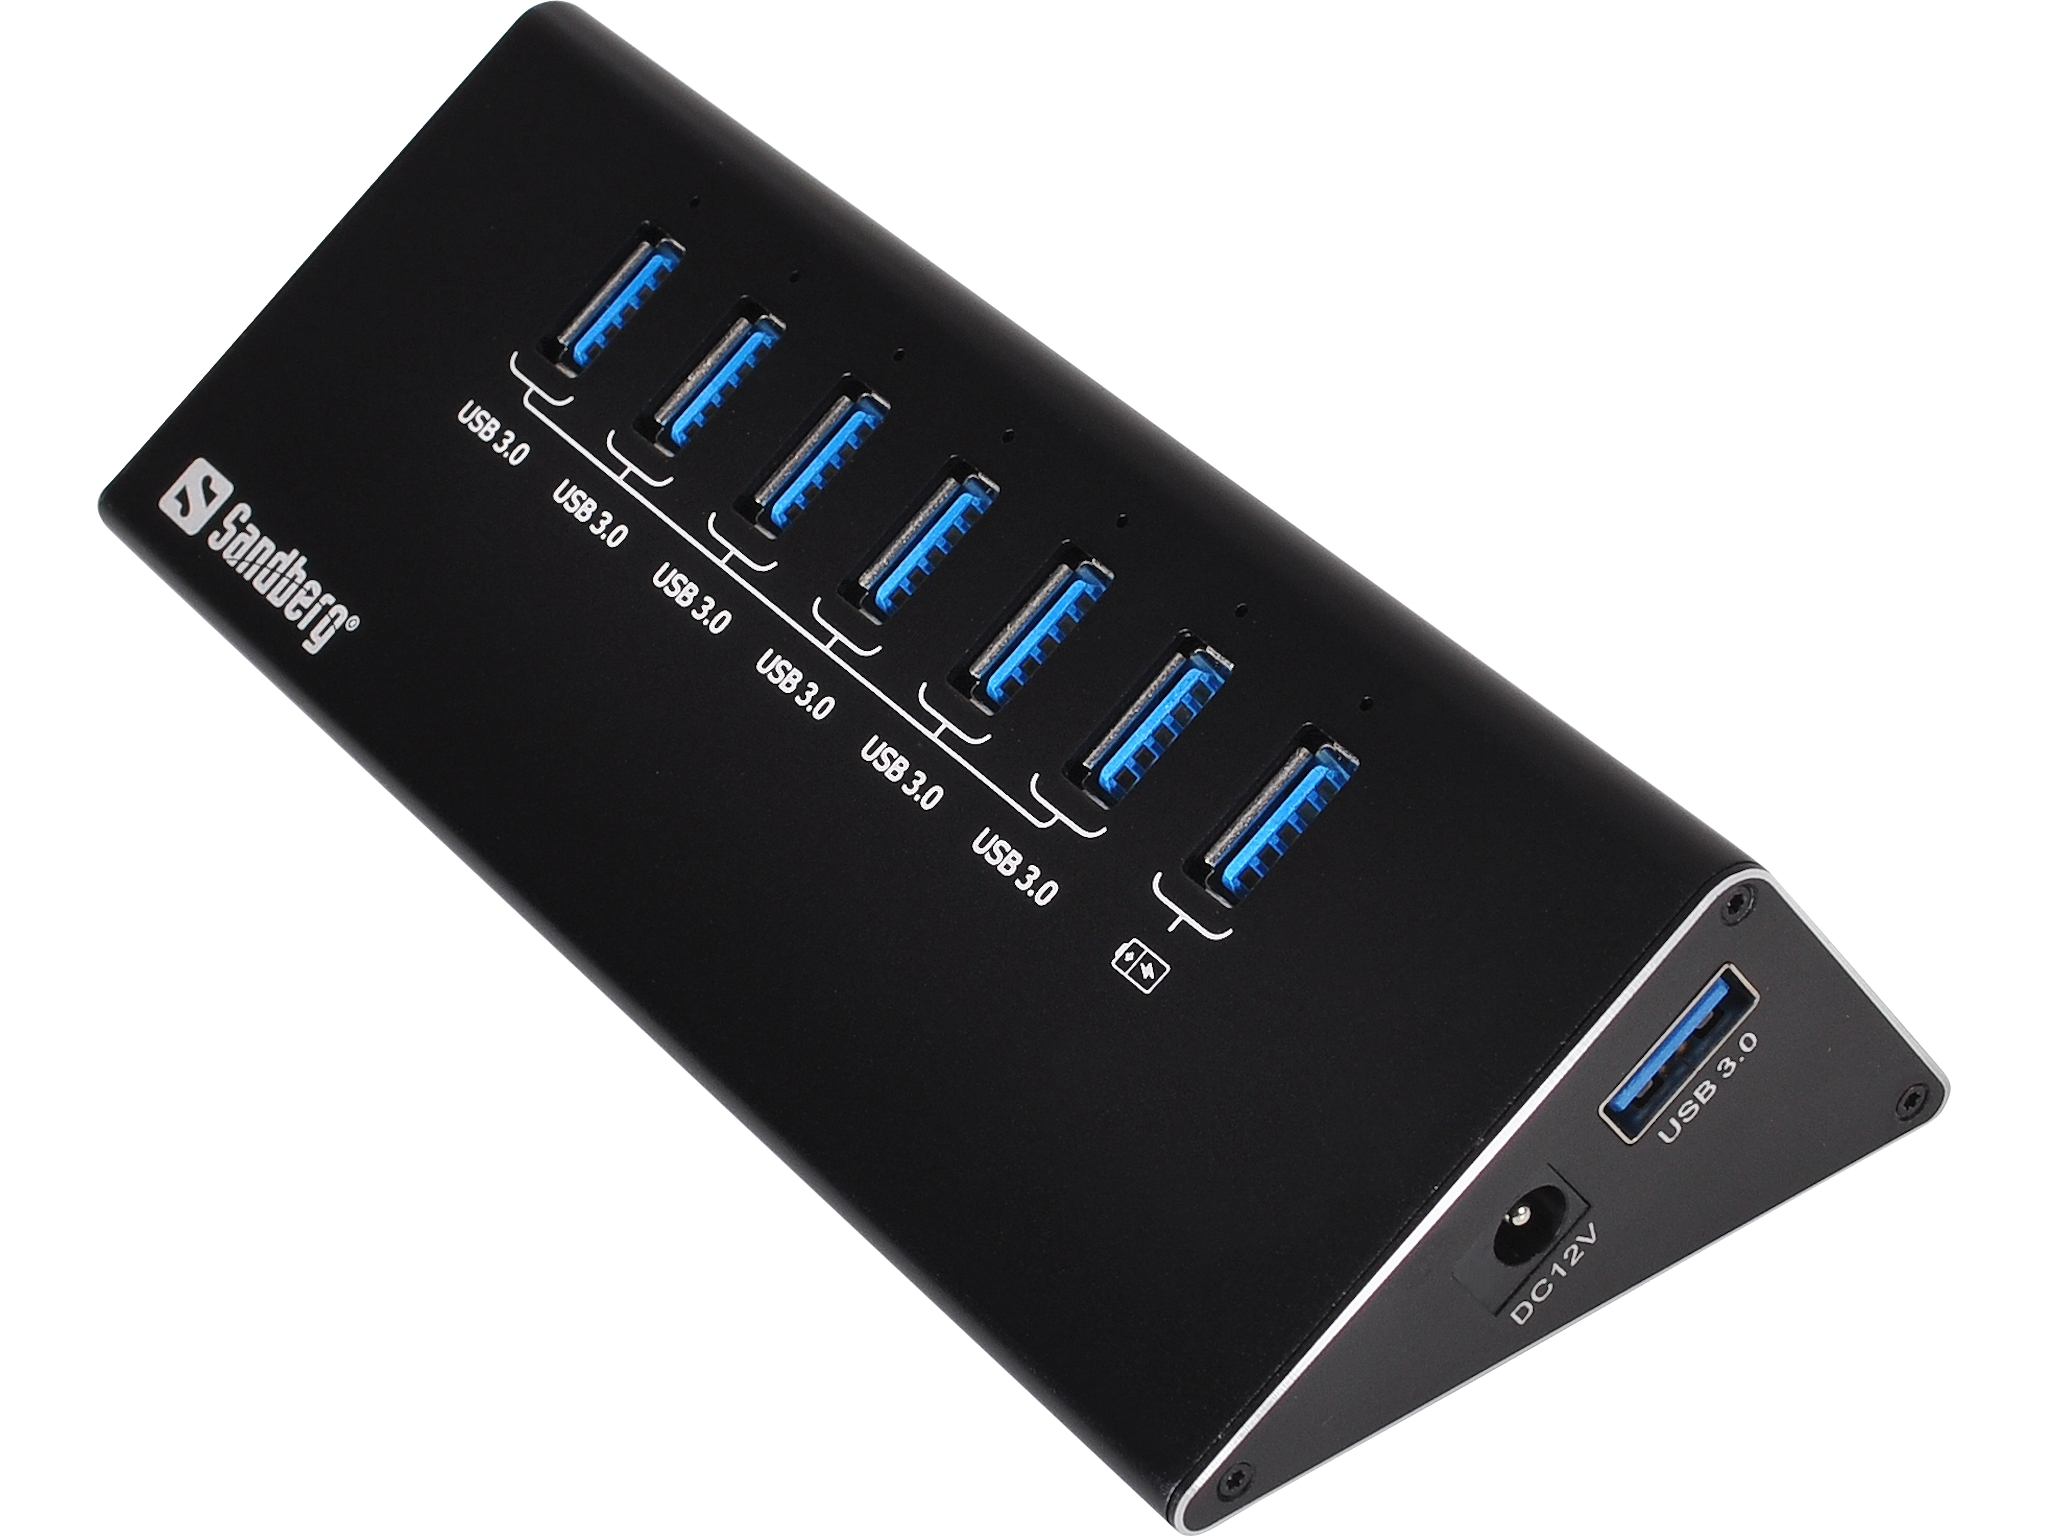 SANDBERG USB 3.0 Hub 7 ports - Hub - 7 x SuperSpeed USB 3.0